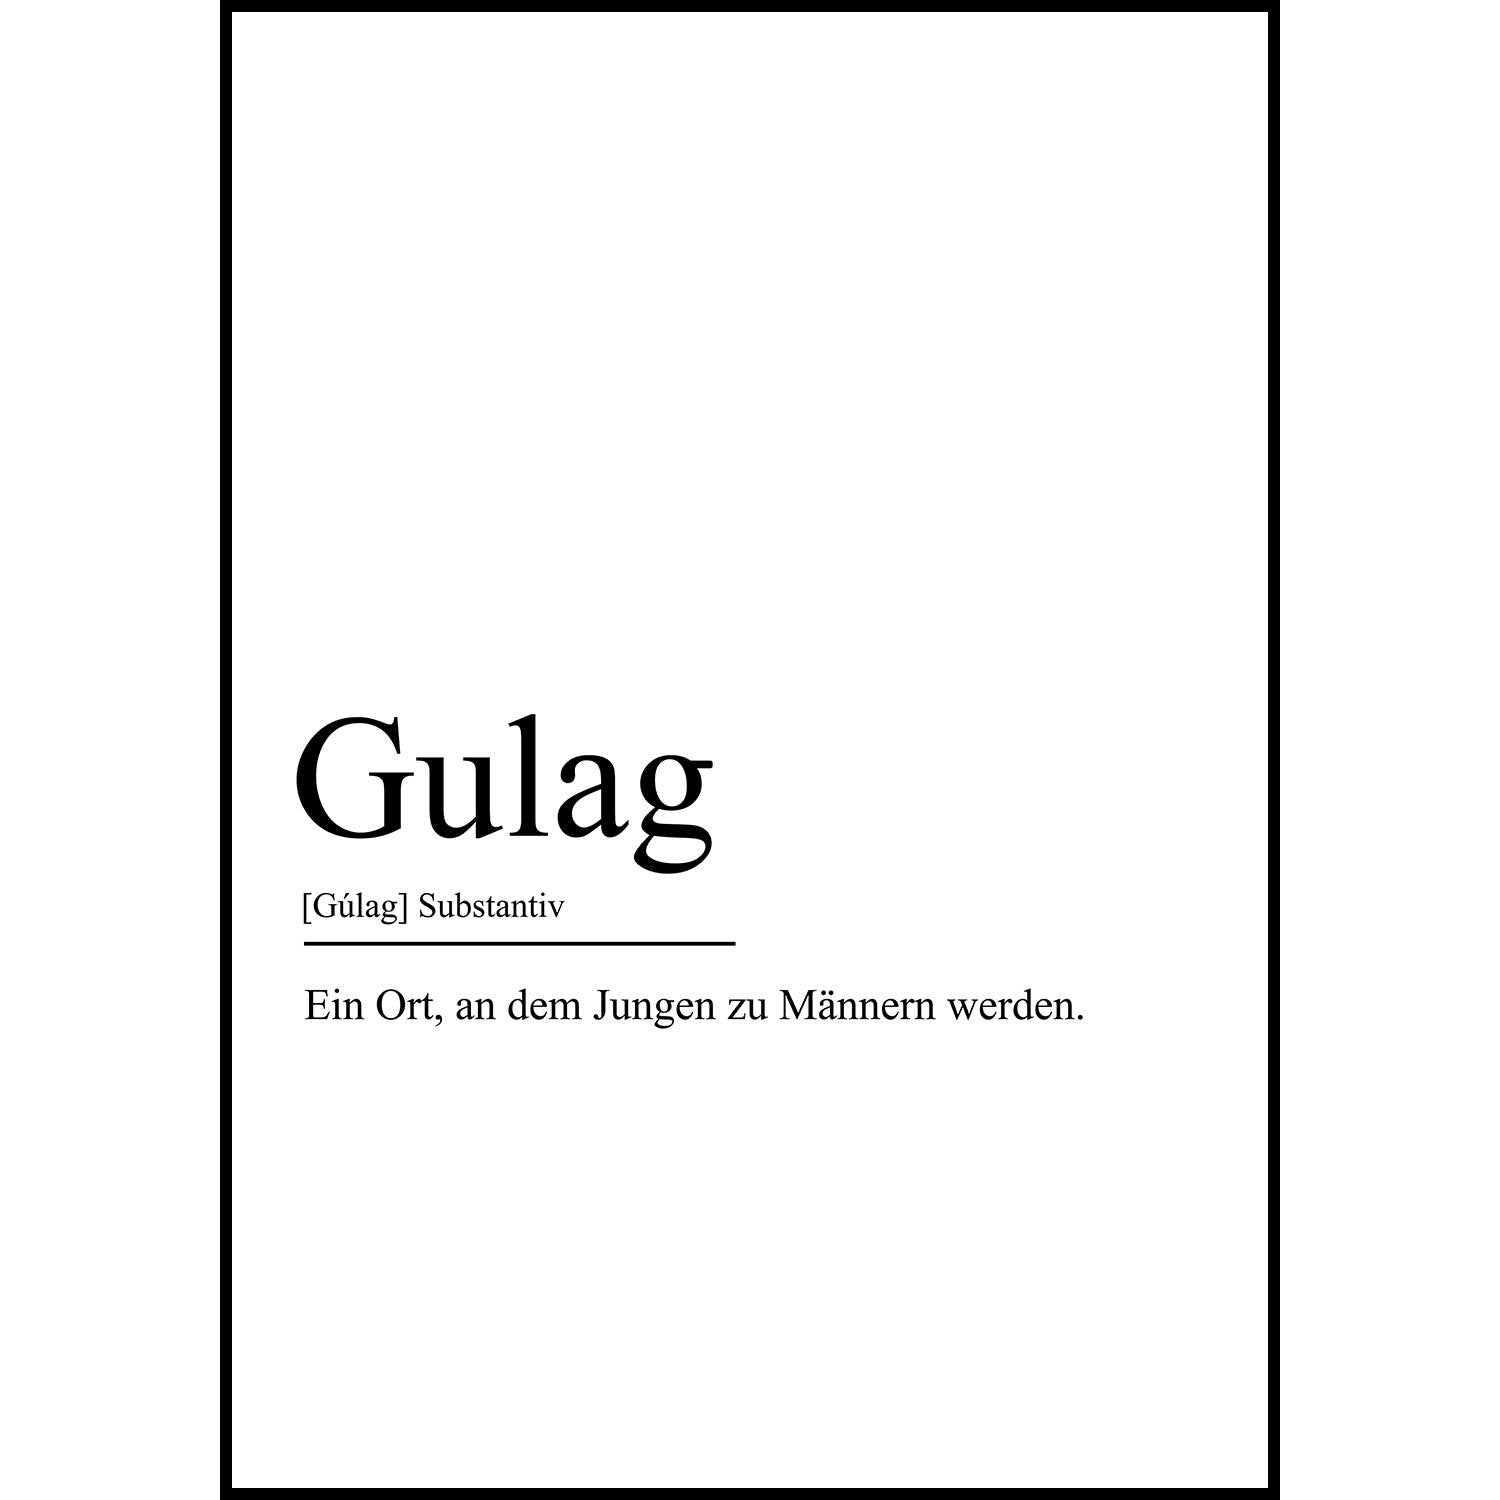 Gulag Definition